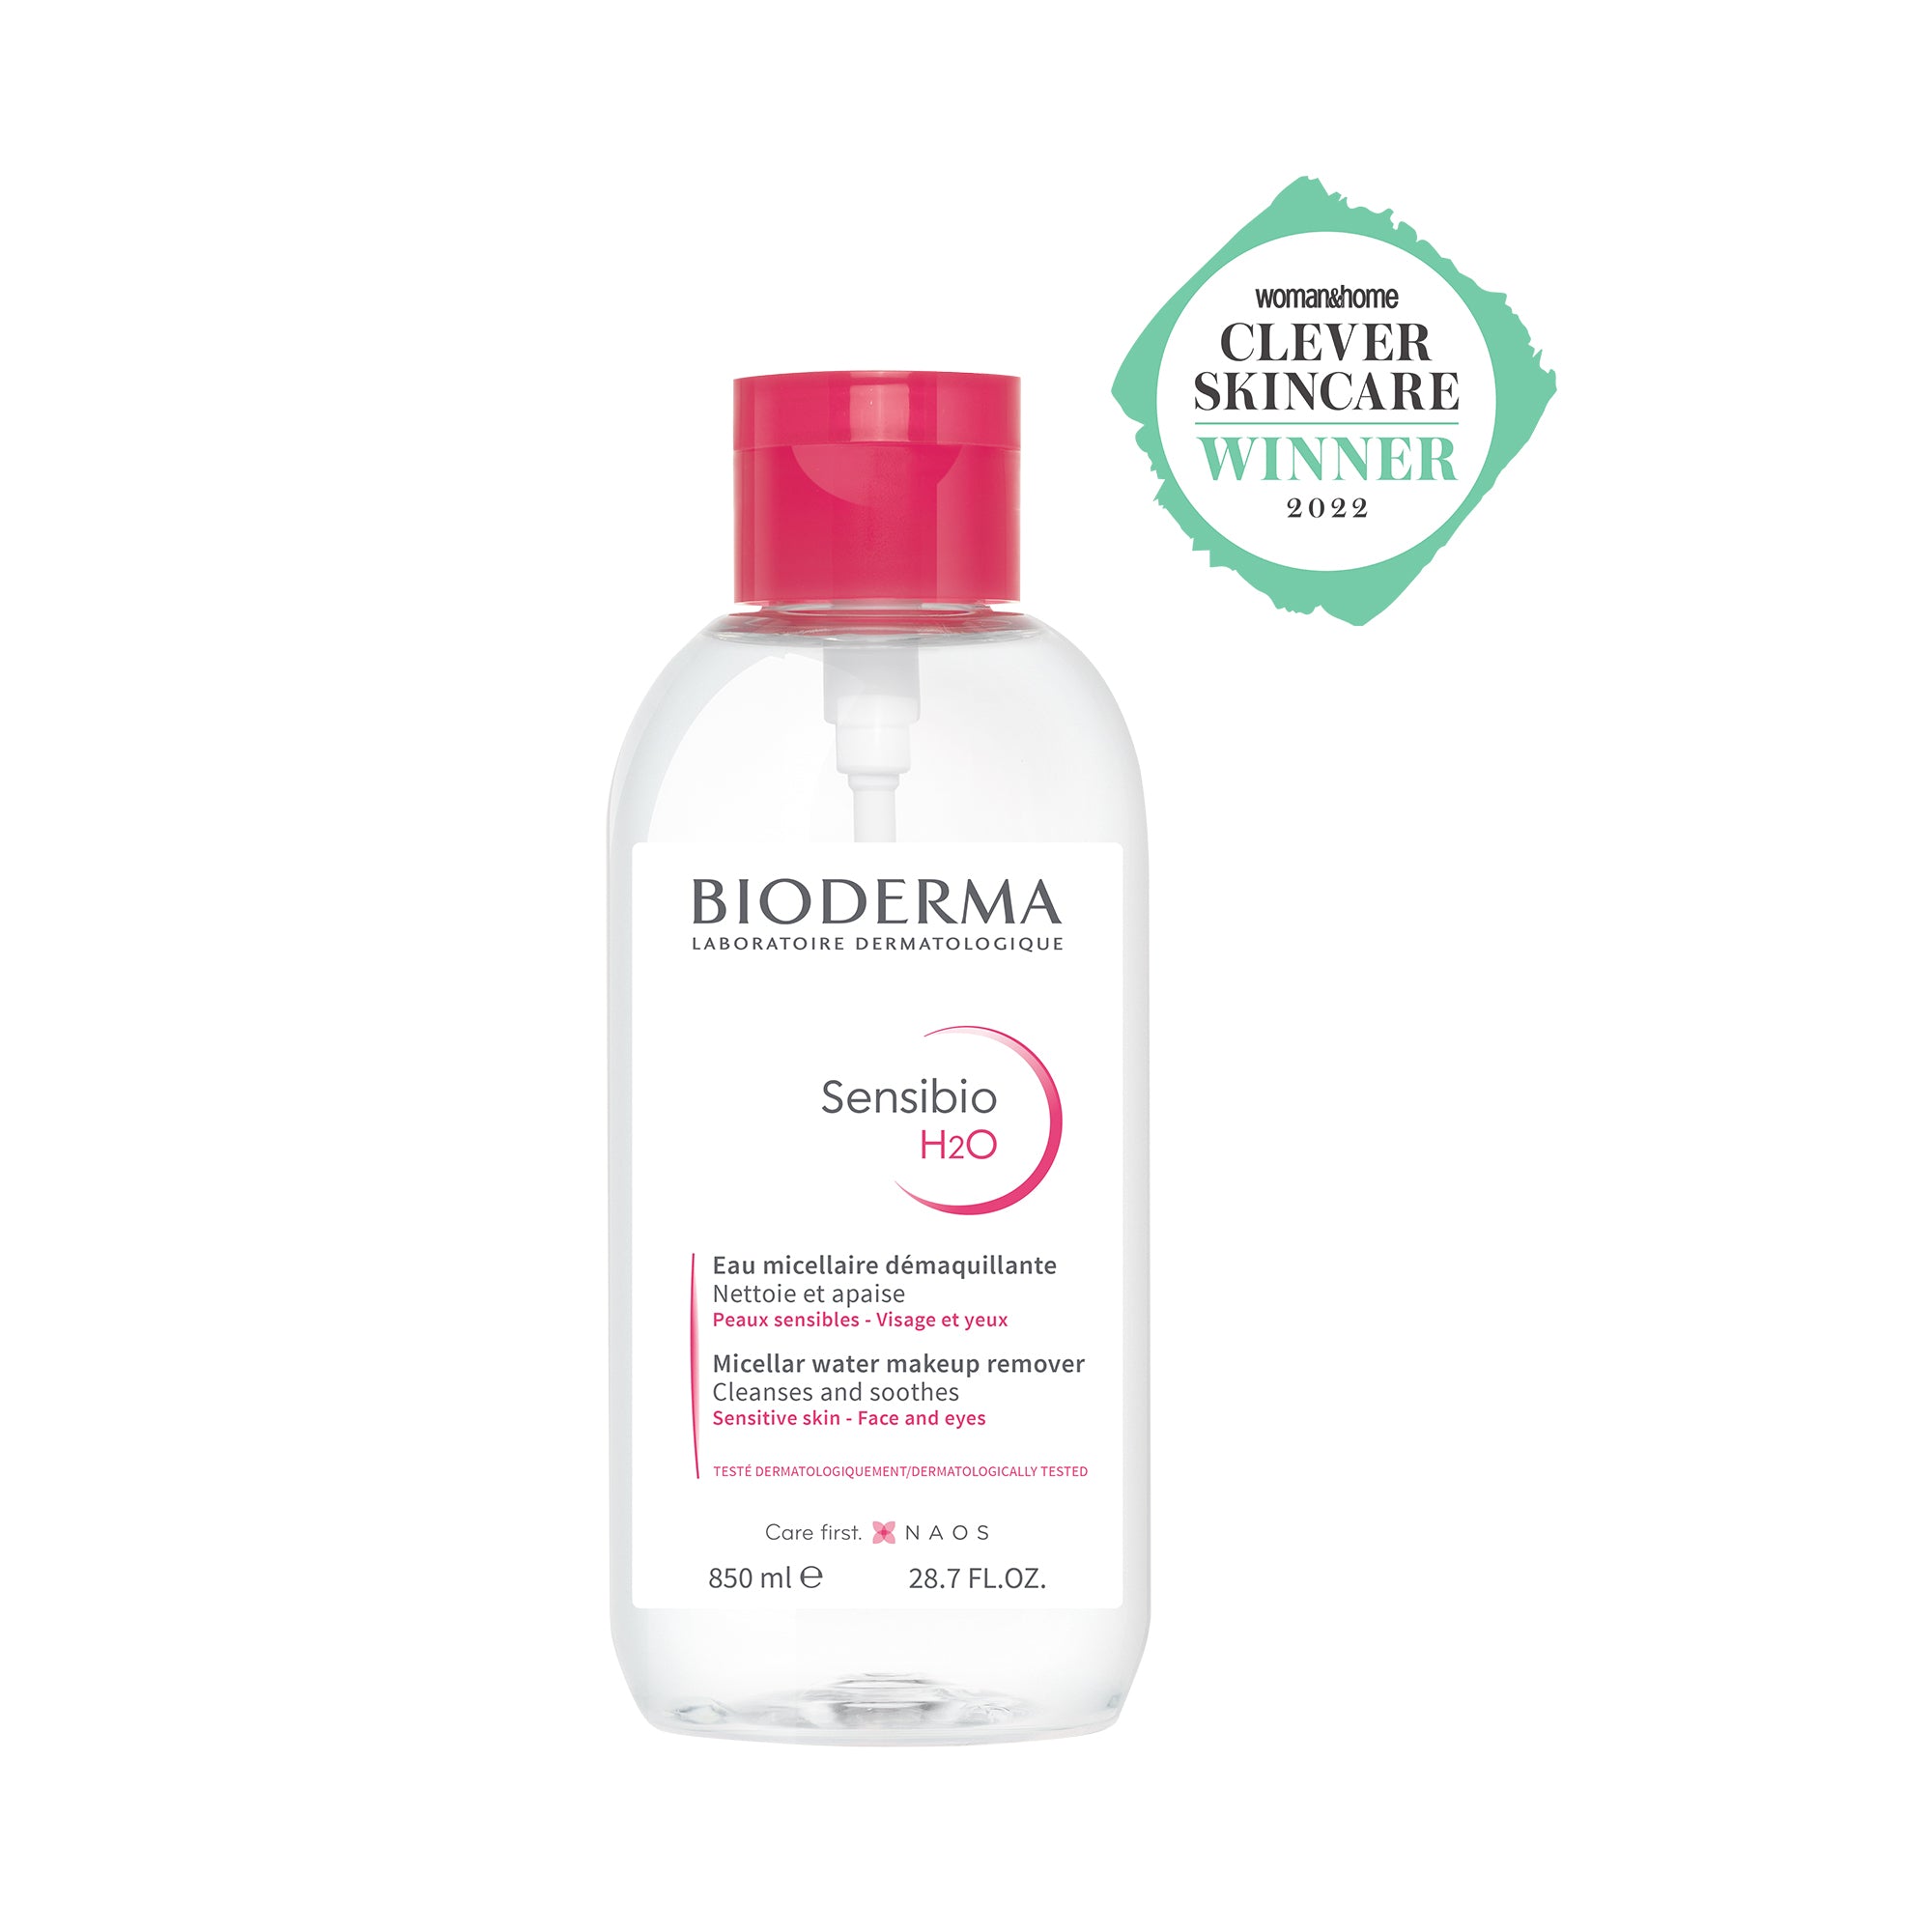 Bioderma Sensibio H2O Micellar water 850ml for Sensitive skin - Reverse Pump